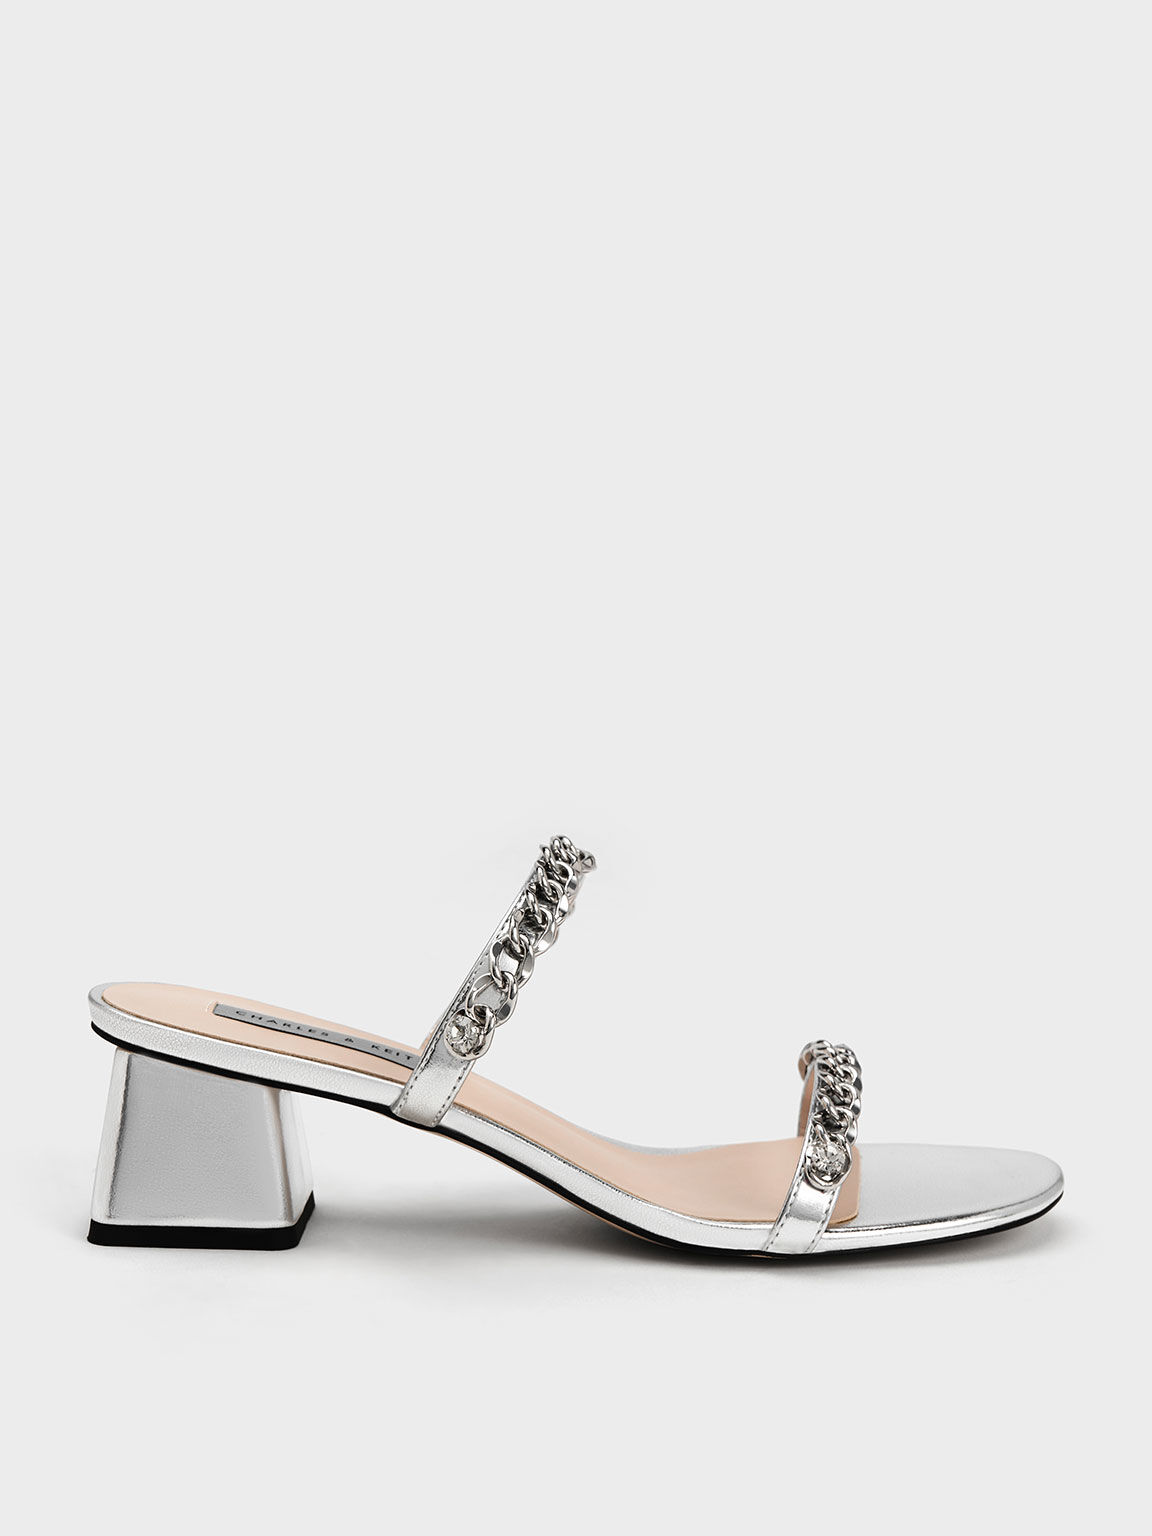 Sandal Block Heel Chain-Link, Silver, hi-res